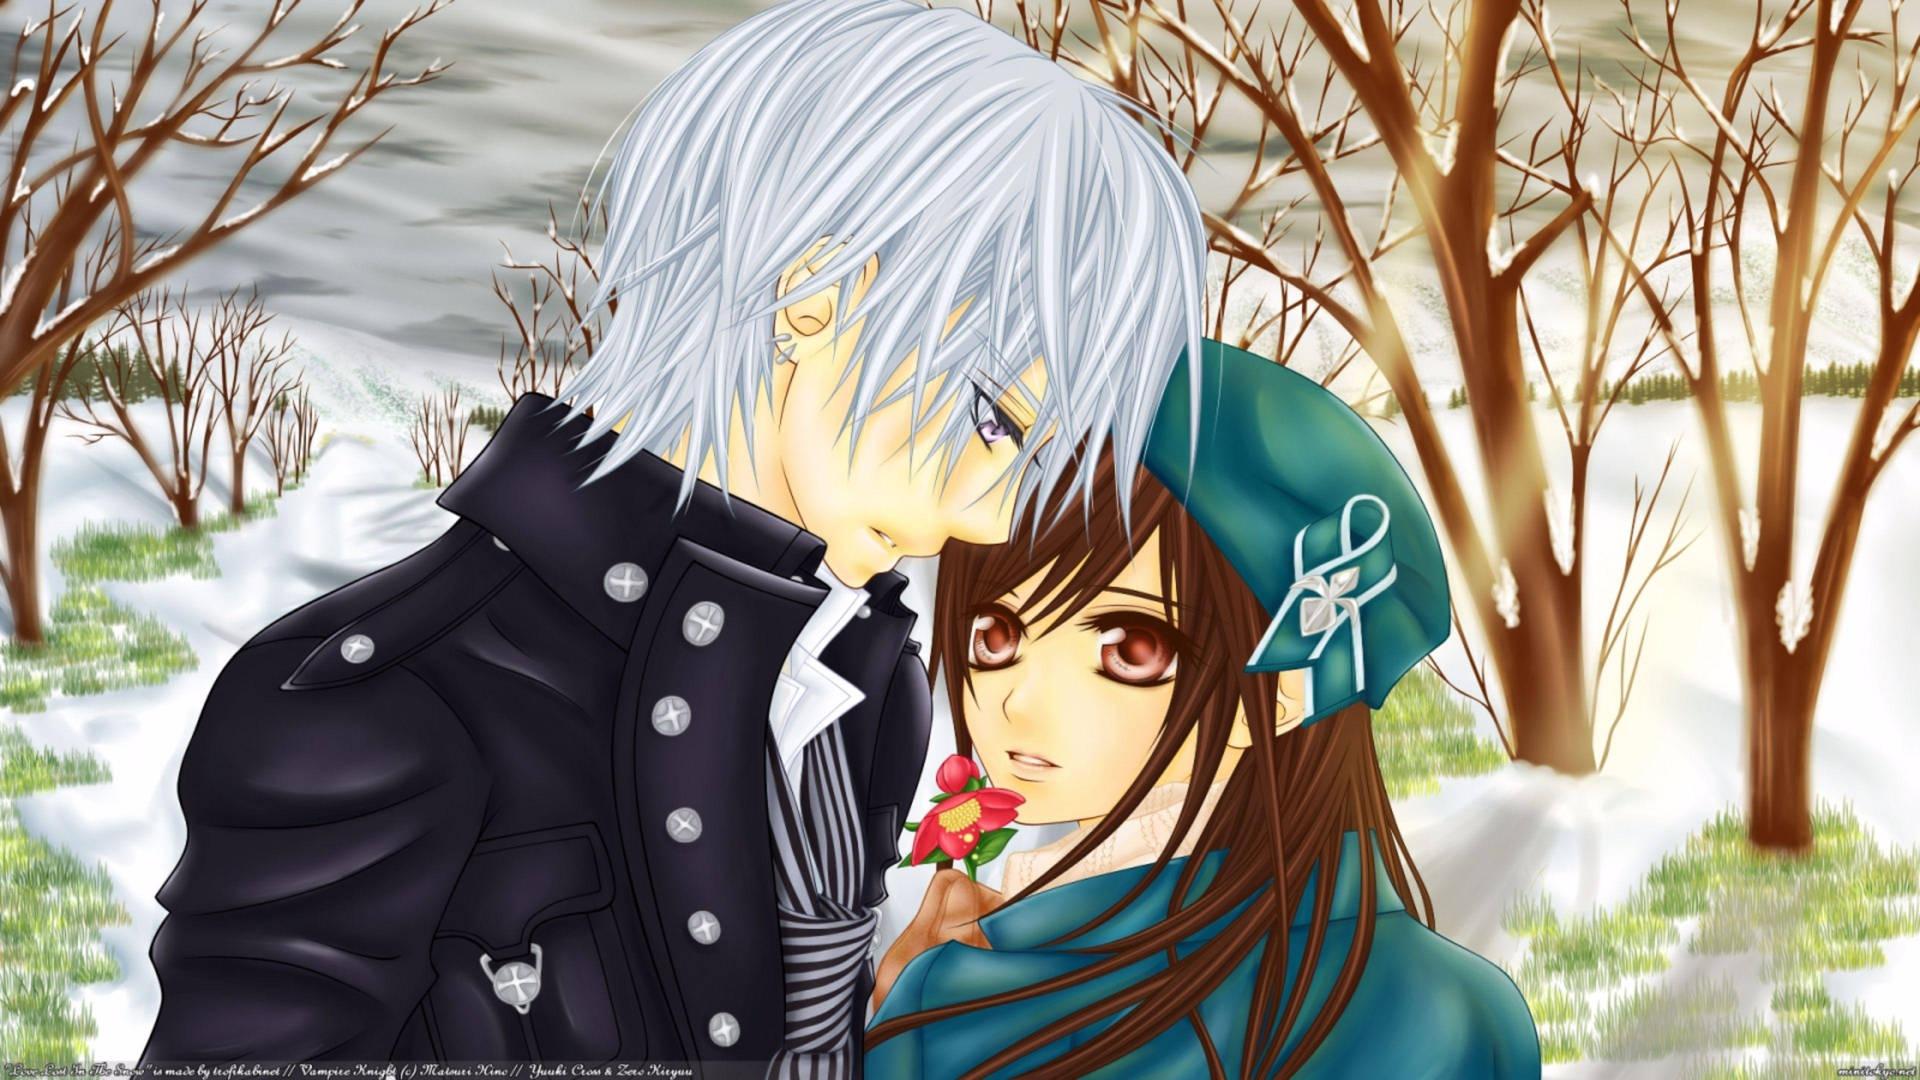 Romantic Anime Couple During Fall Season Wallpaper